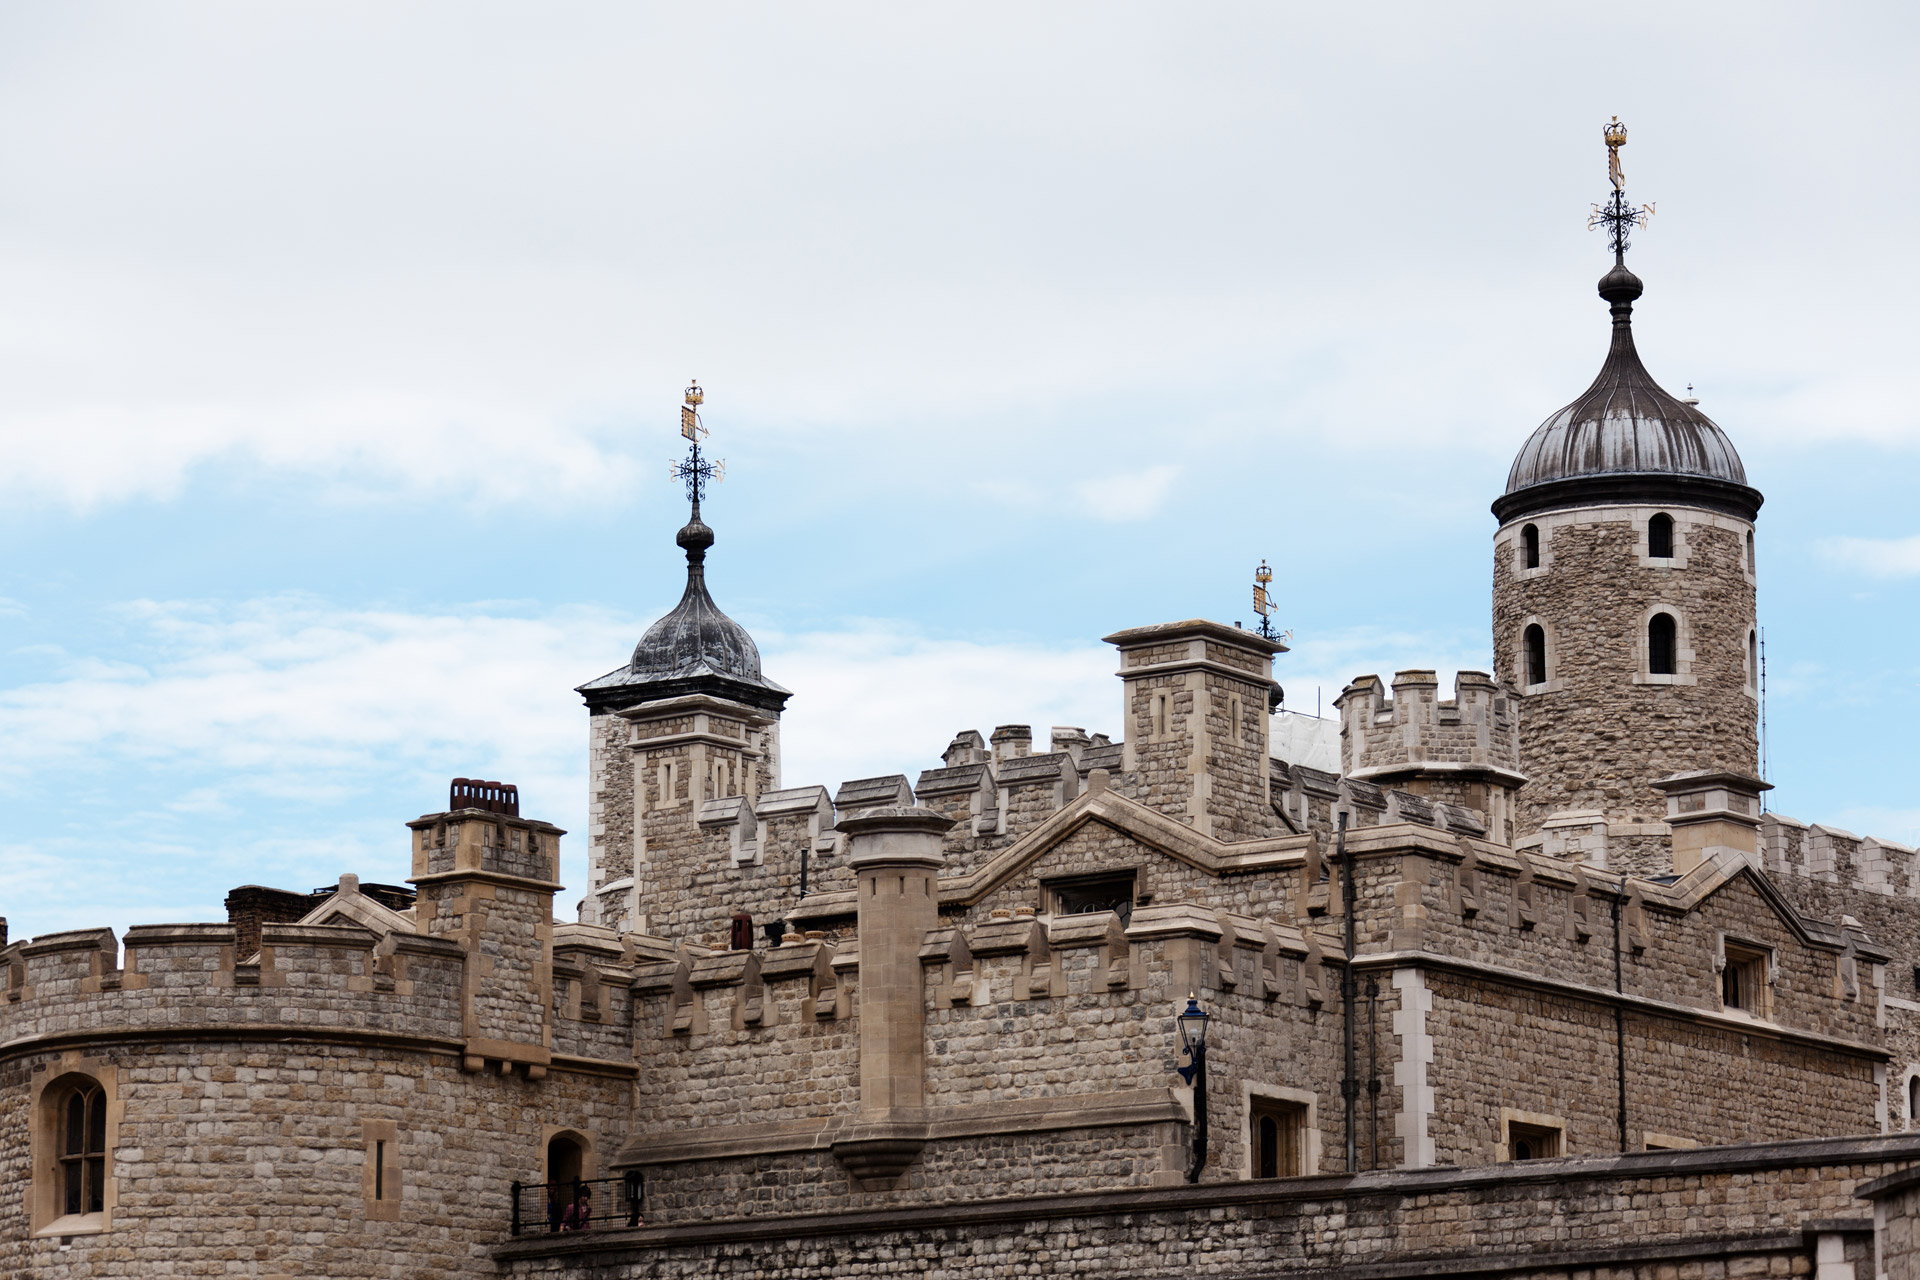 The Tower of London (Sumber foto: publicdomainpictures.net)